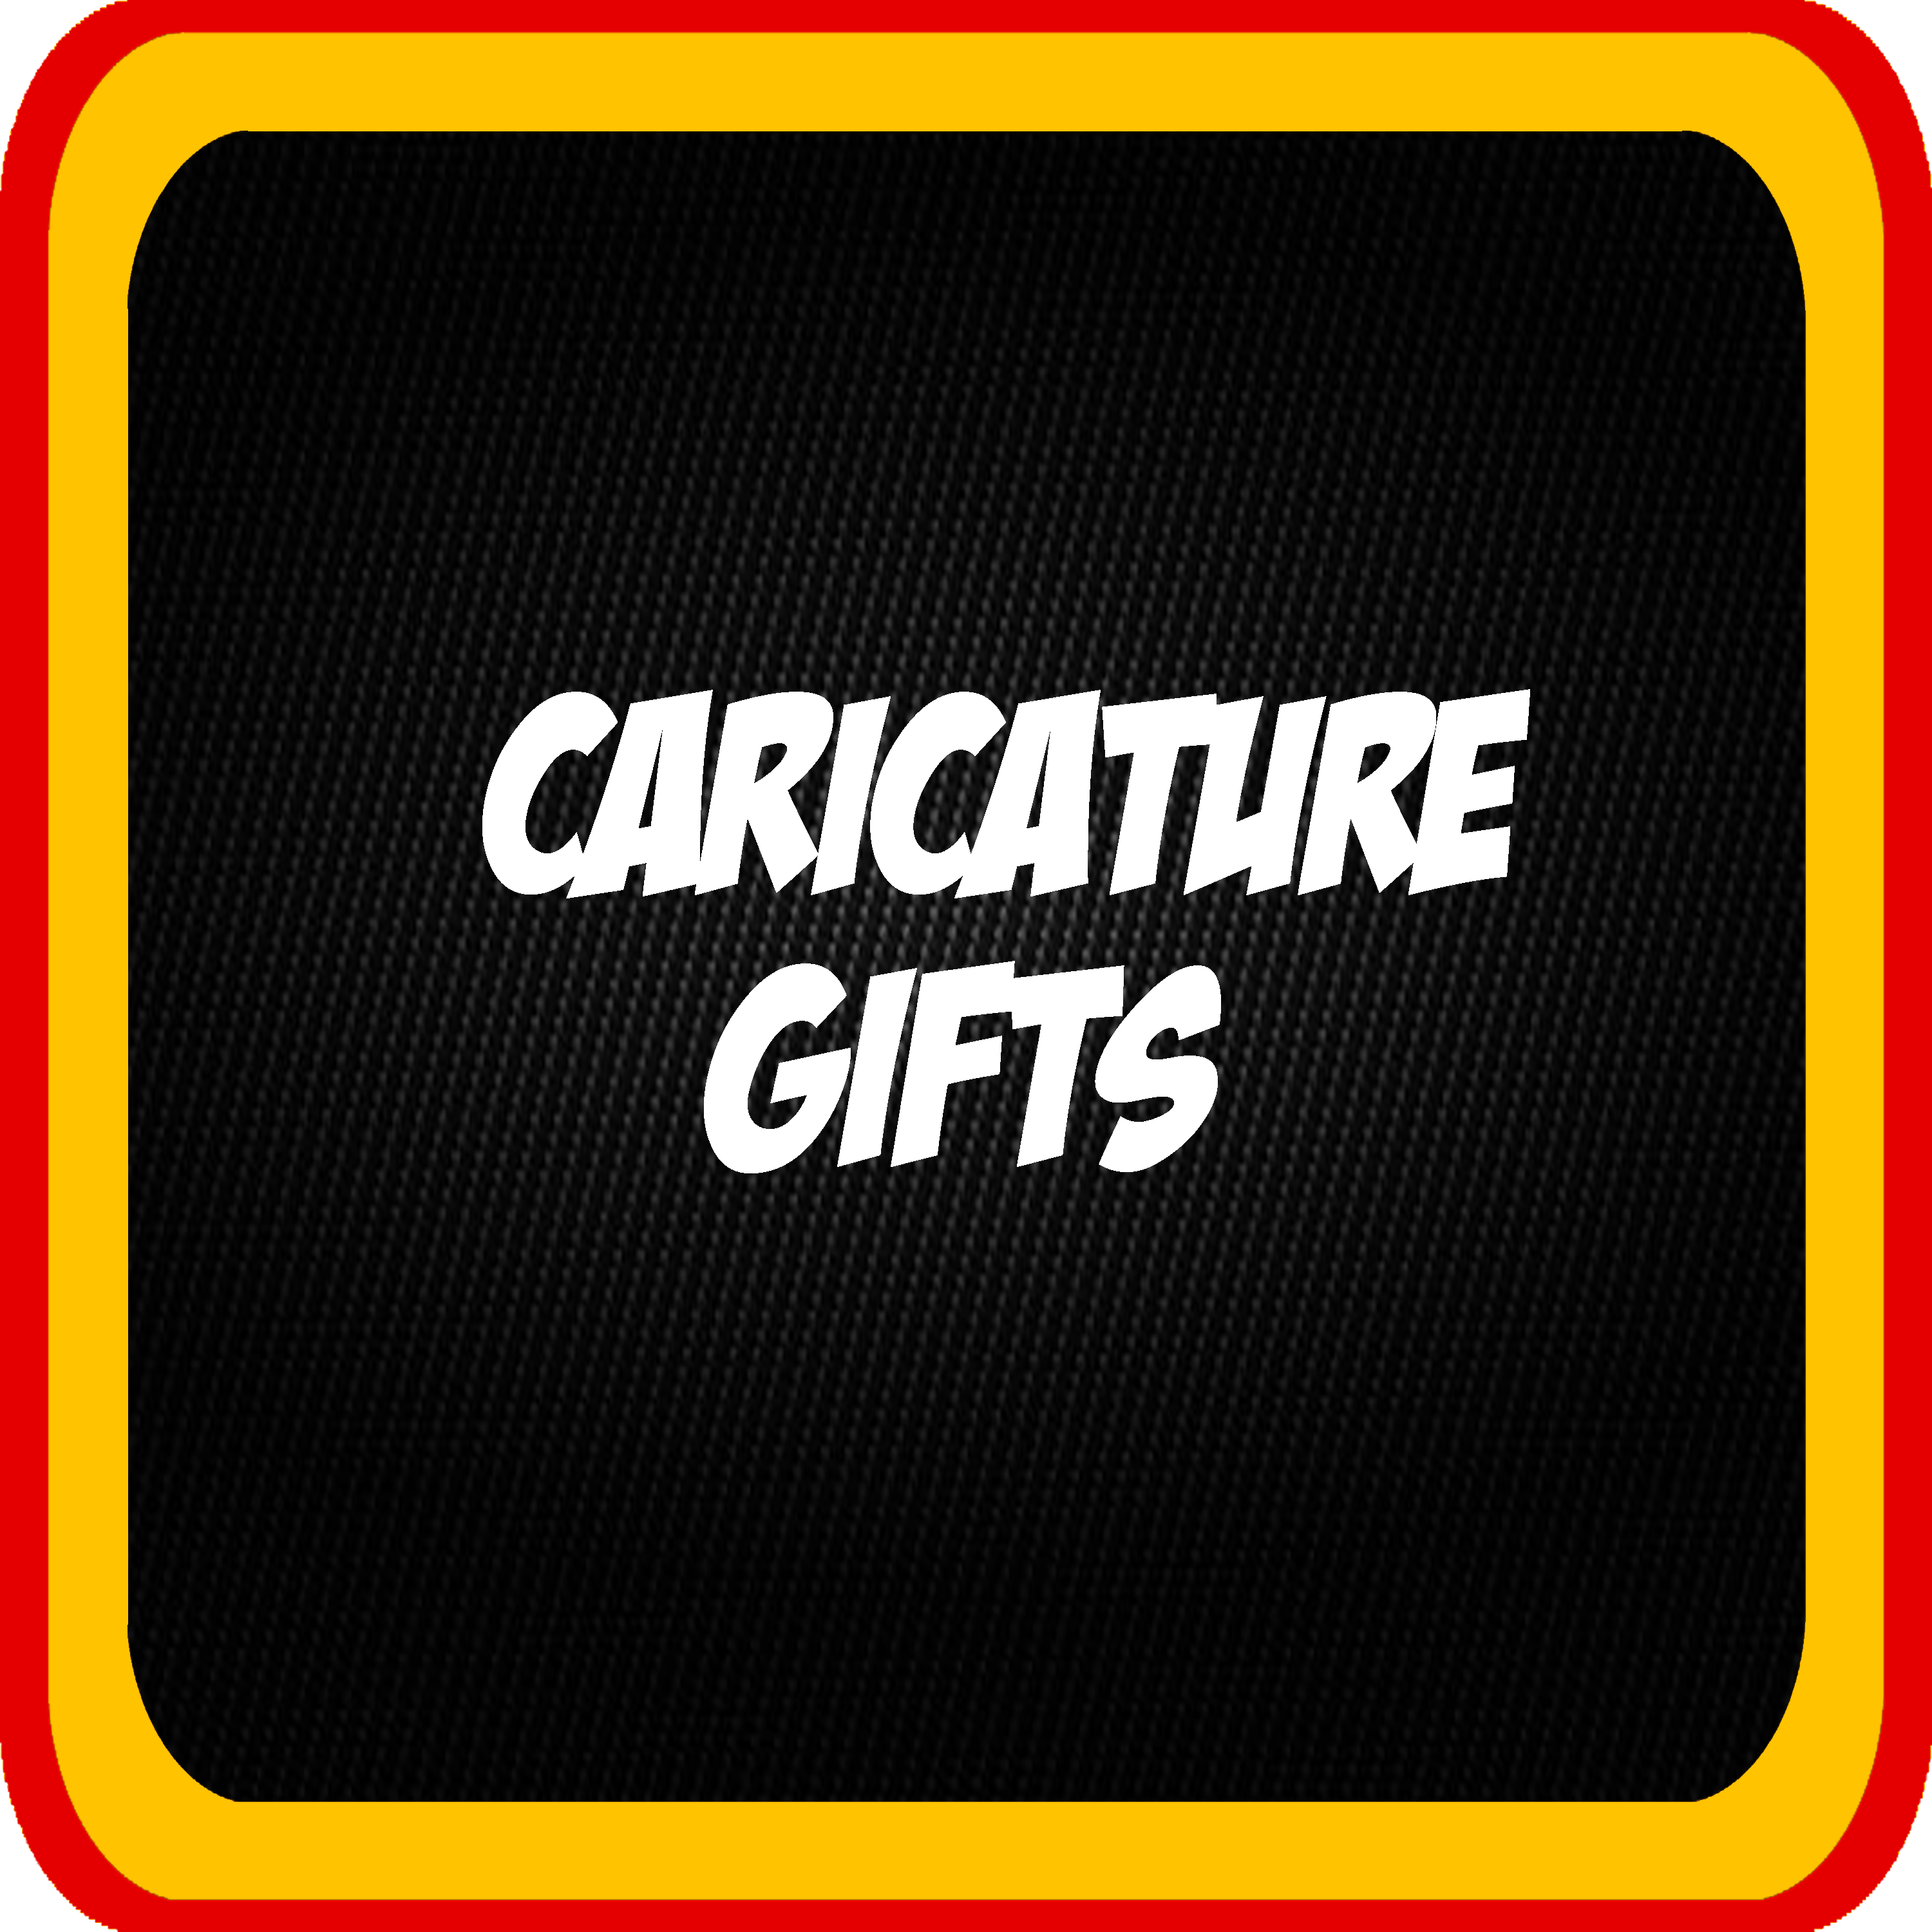 Caricature Gifts, Corporate Gift Ideas, Specialty Gifts, Caricatures from photos, Caricatures, Big Head Cartoon, Digital Caricatures, Team Gift Ideas